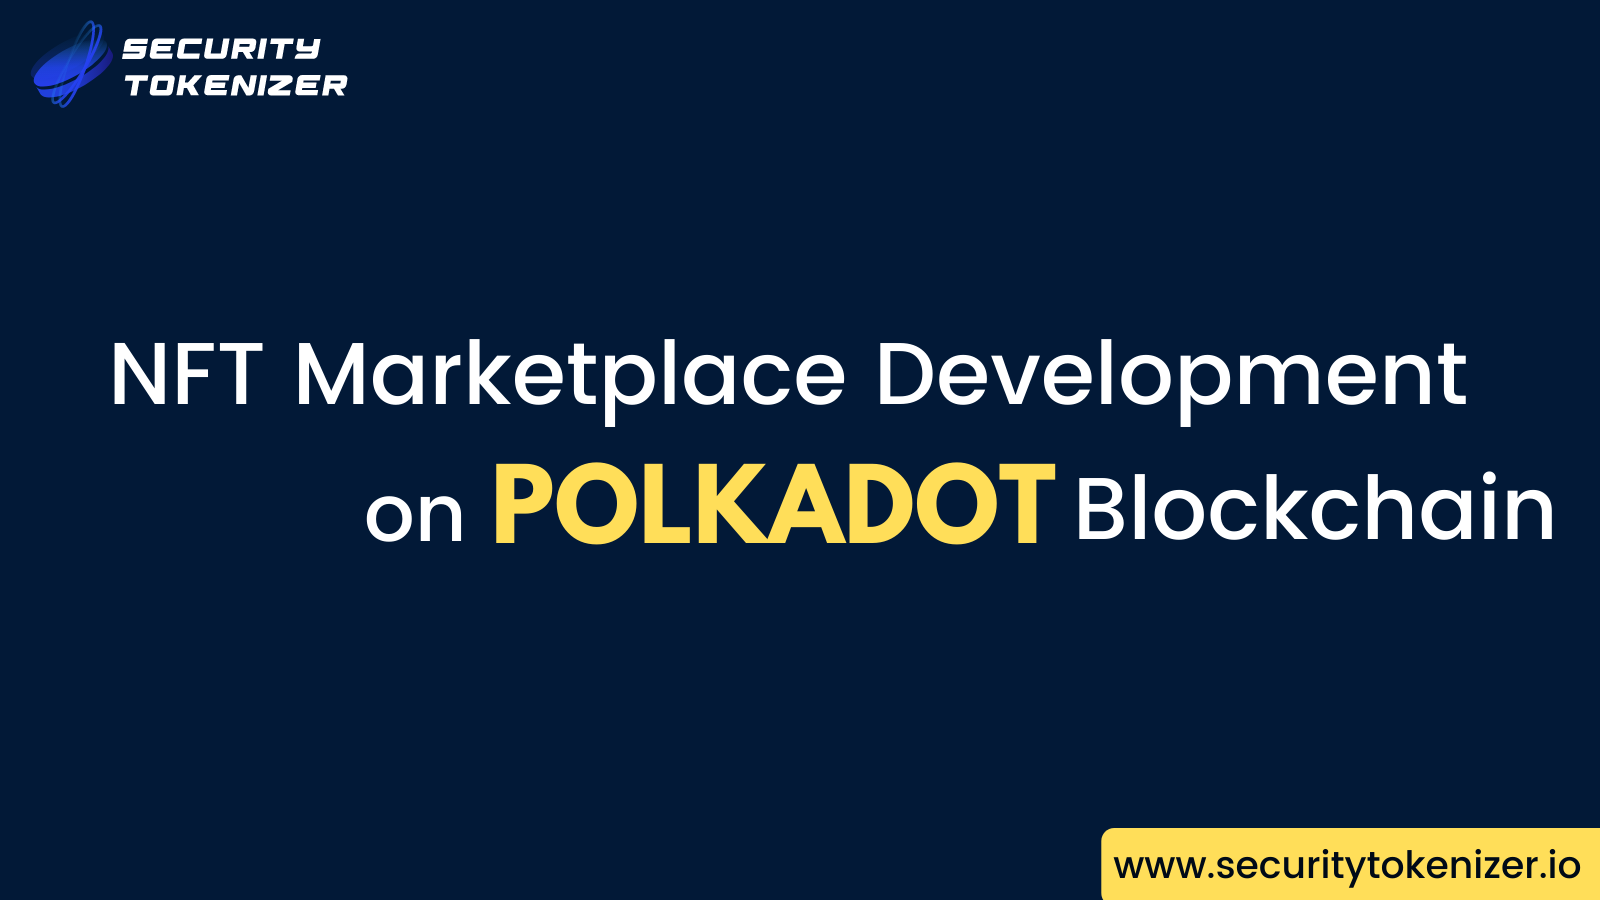 Polkadot NFT Marketplace Development Company - Security Tokenizer